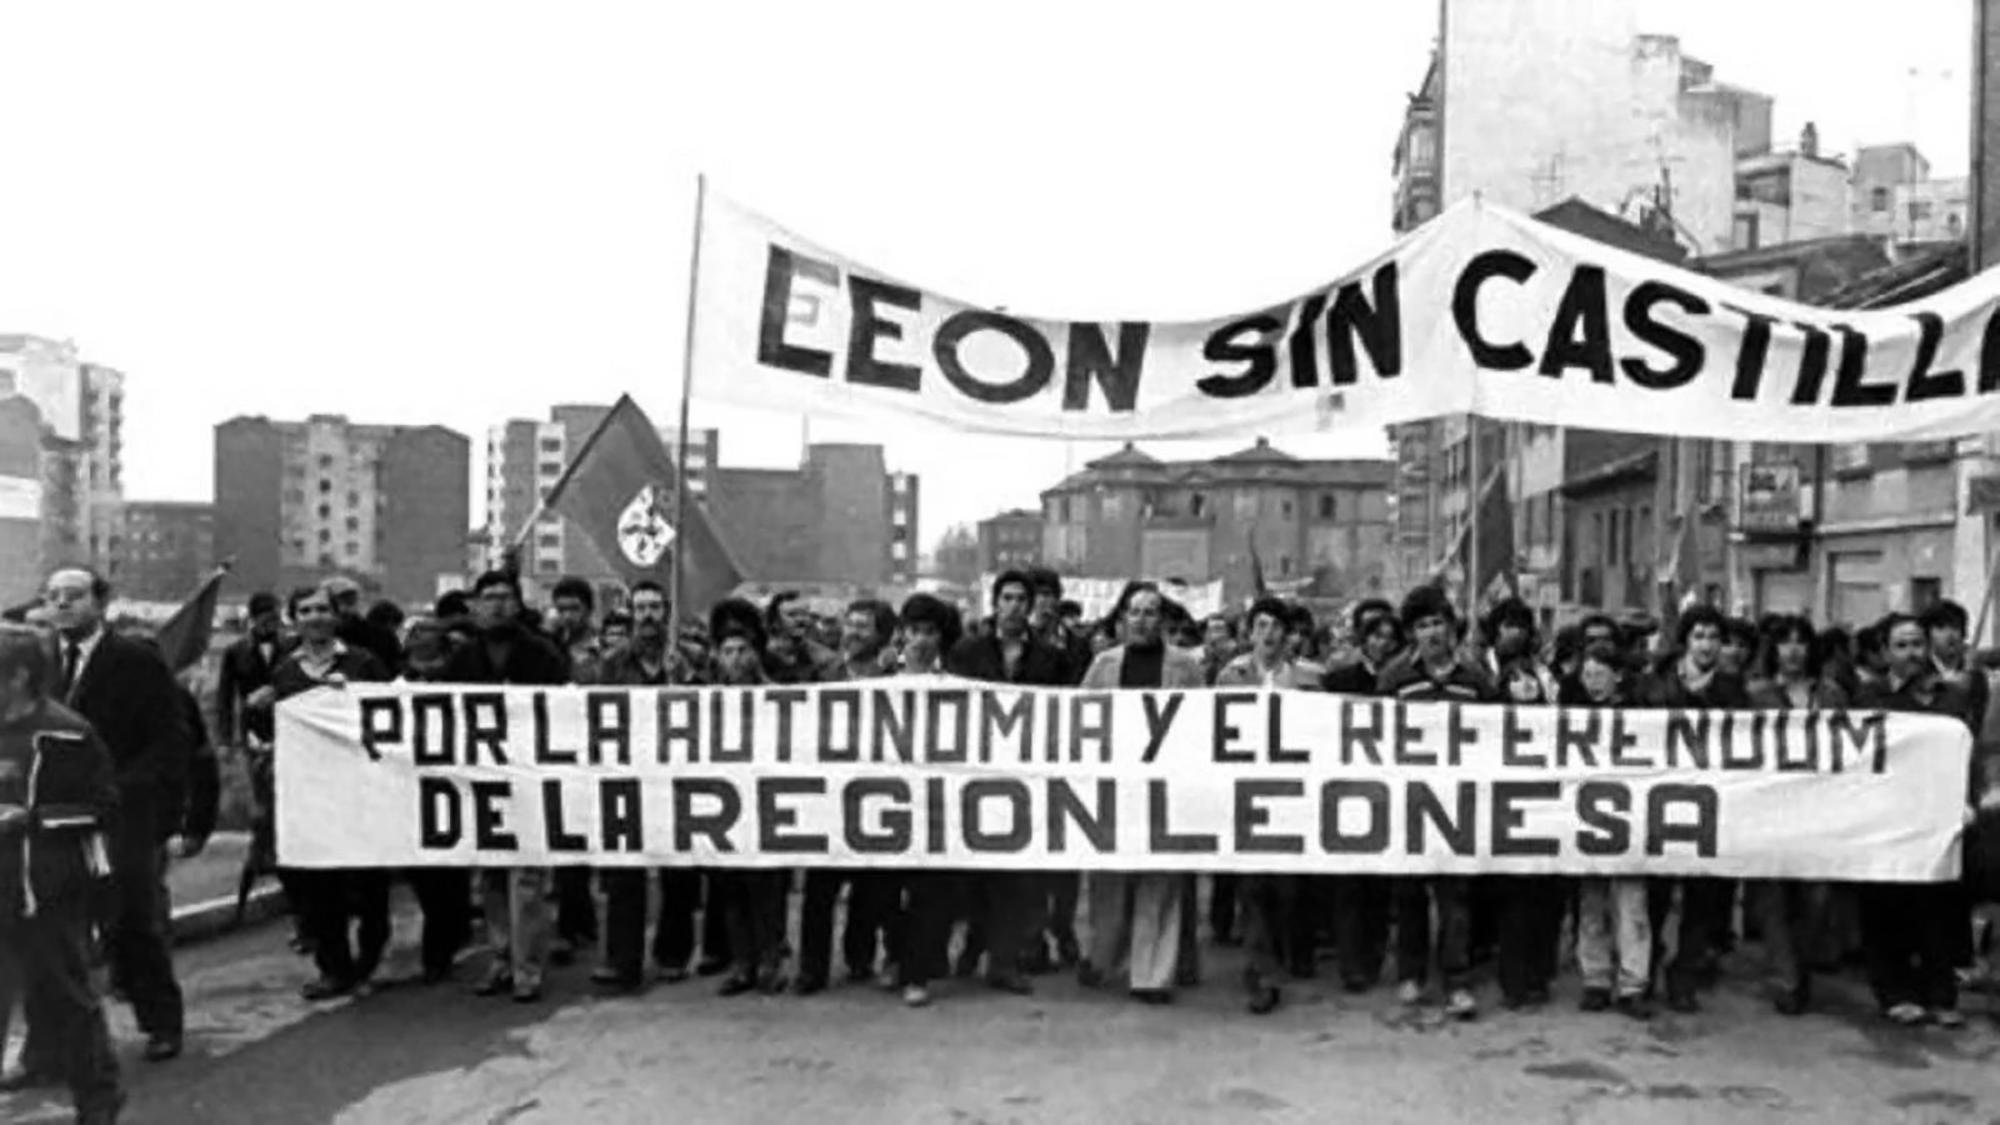 Leon autonomia - 3